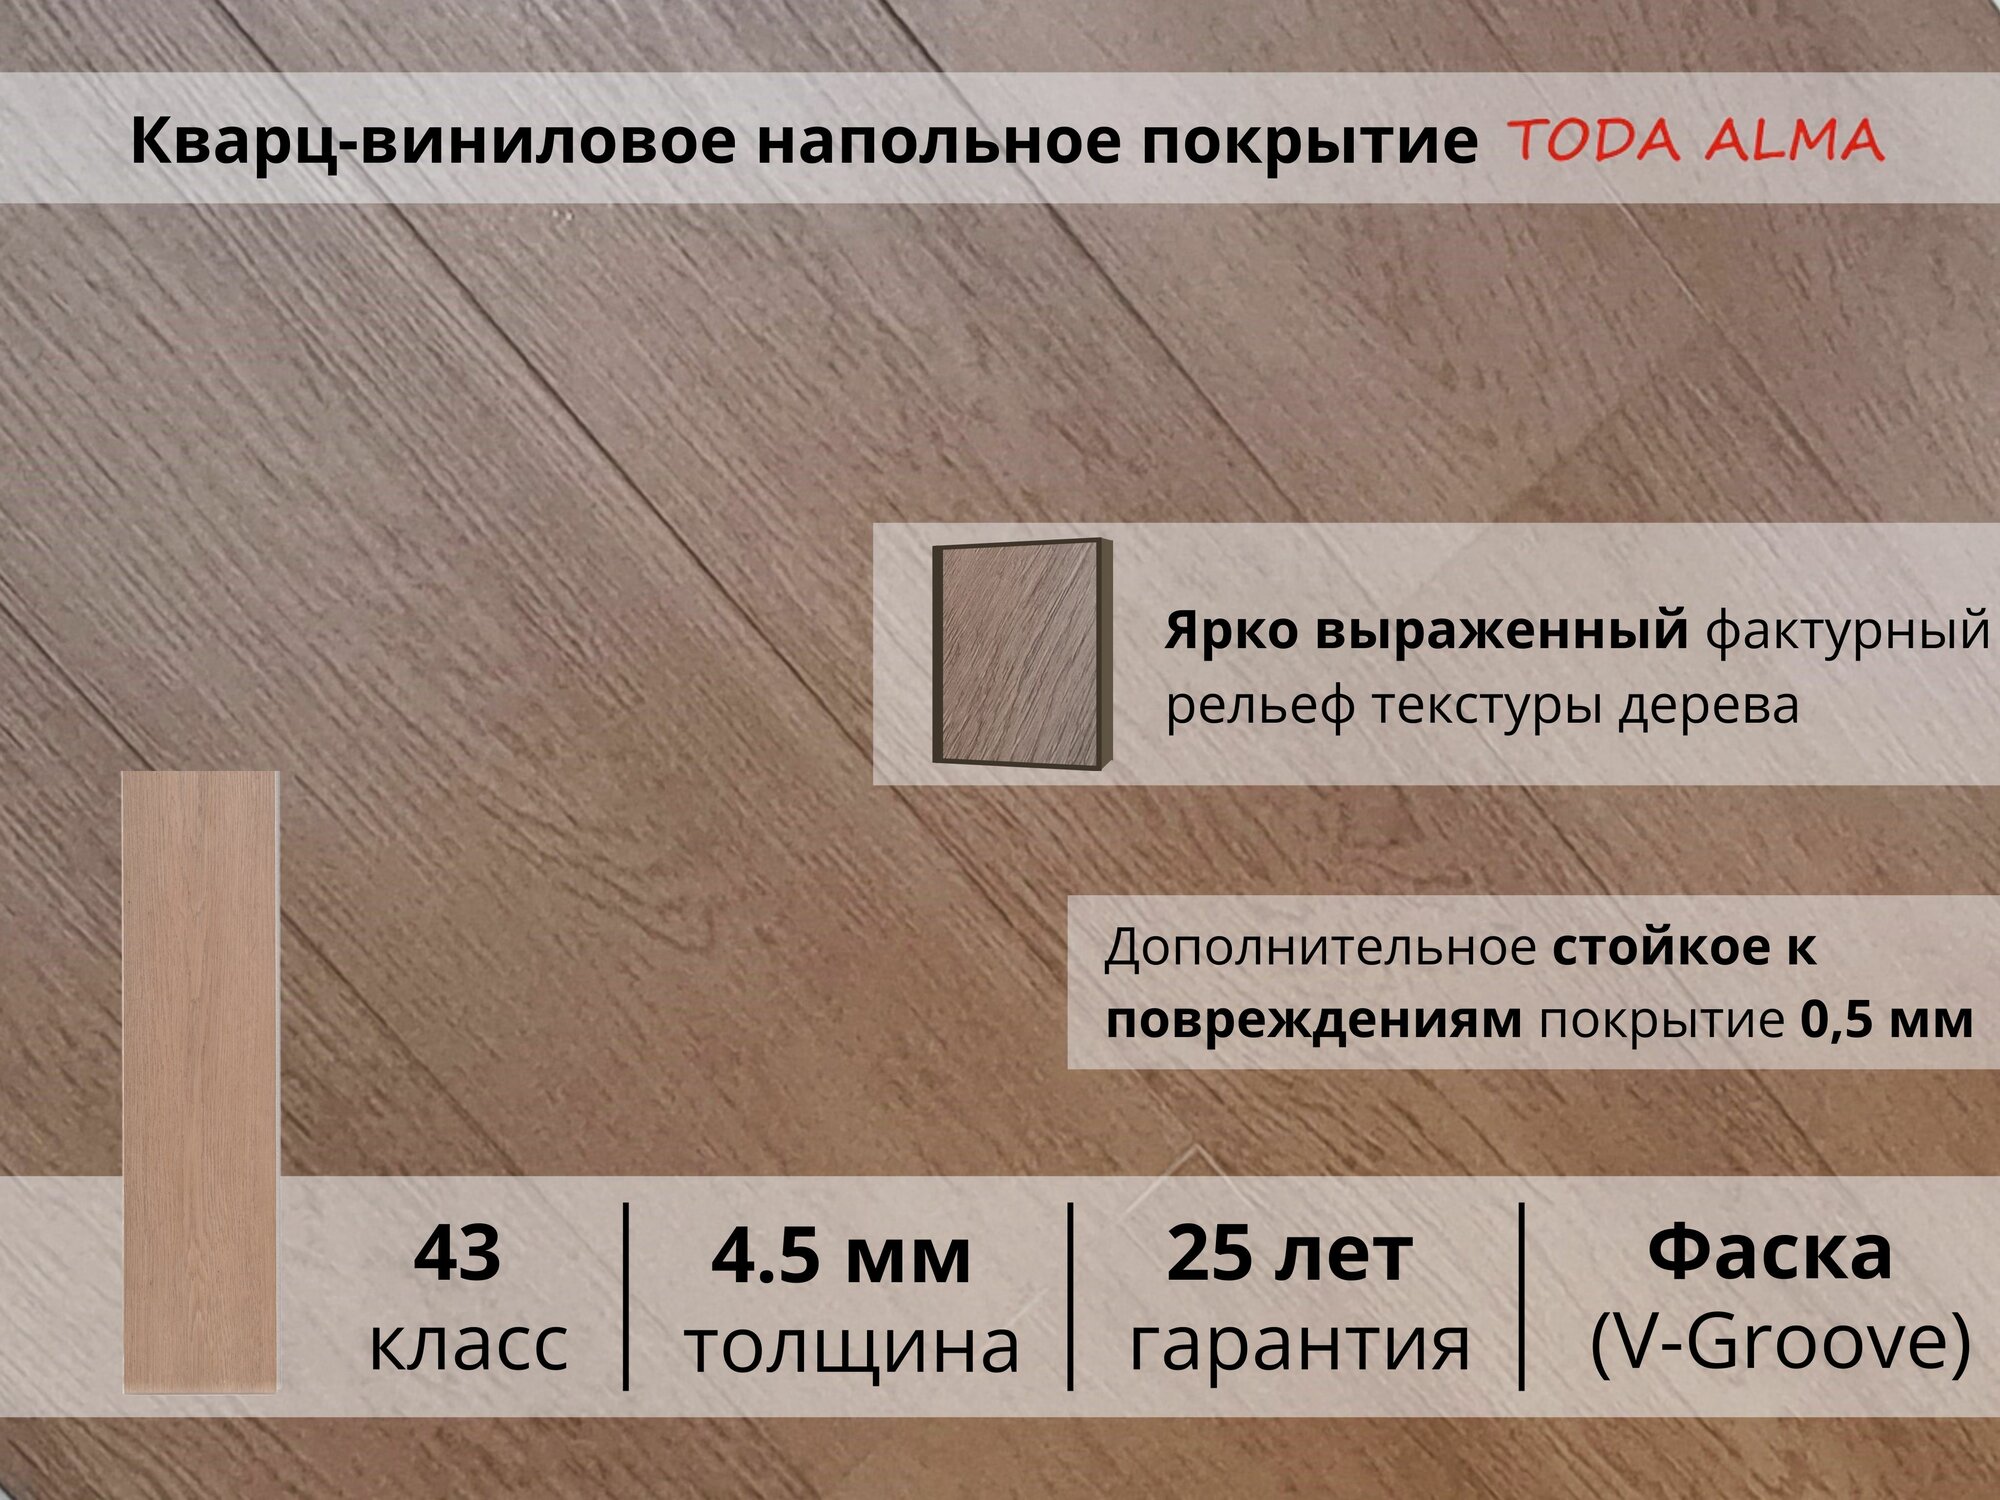 Spc панели, кварц винил flooring 43 класс, Дуб натуральный Chocolate Tobacco 4.5 мм. TODA ALMA